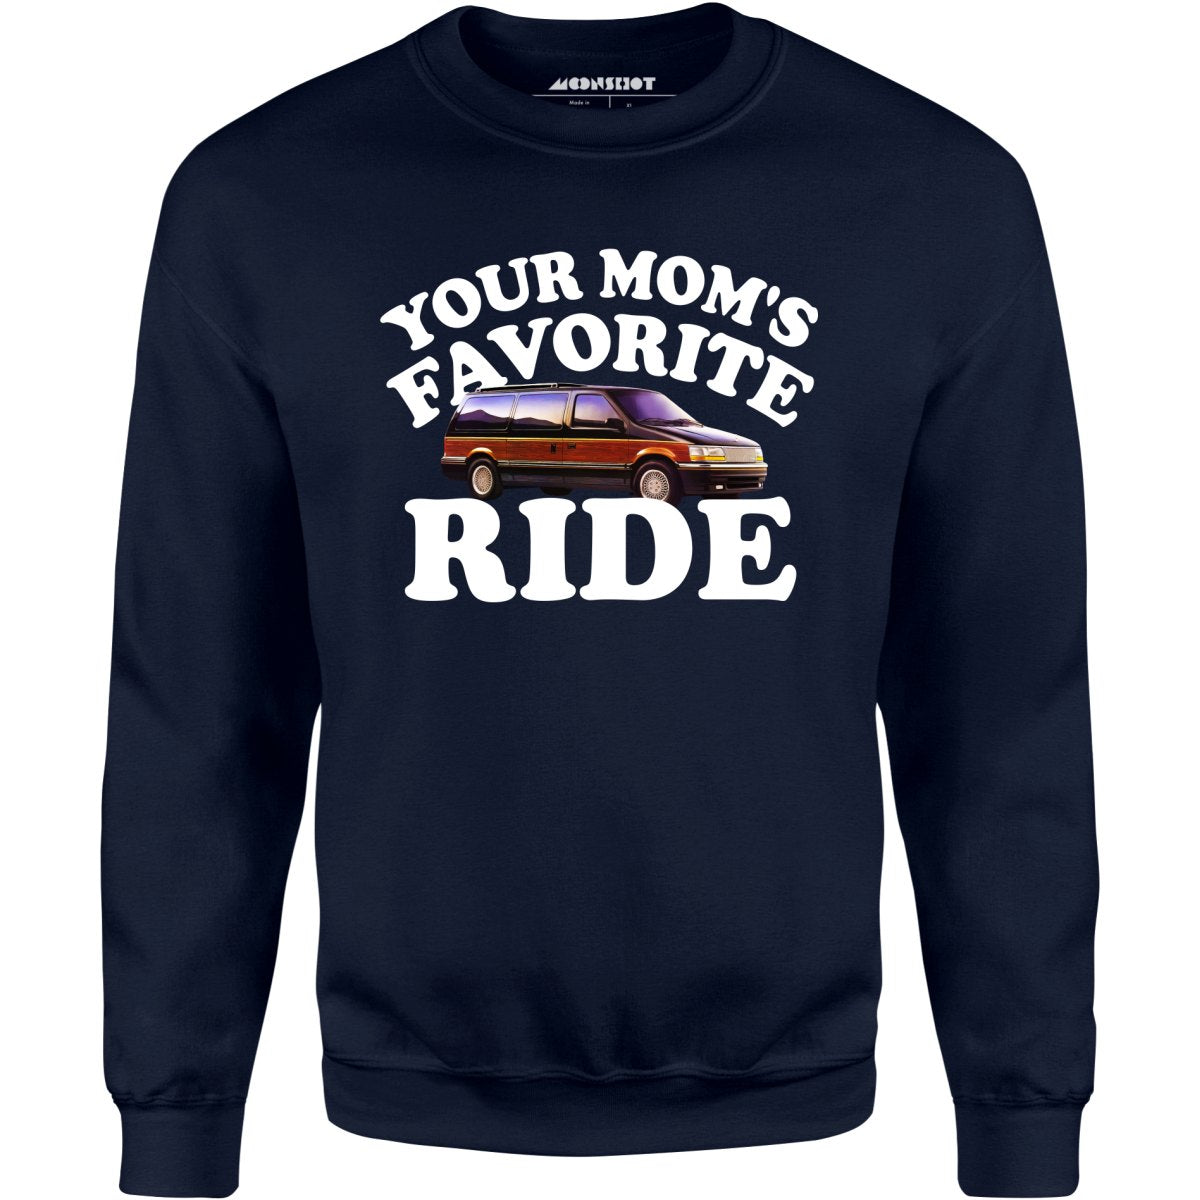 Your Mom's Favorite Ride - Unisex Sweatshirt